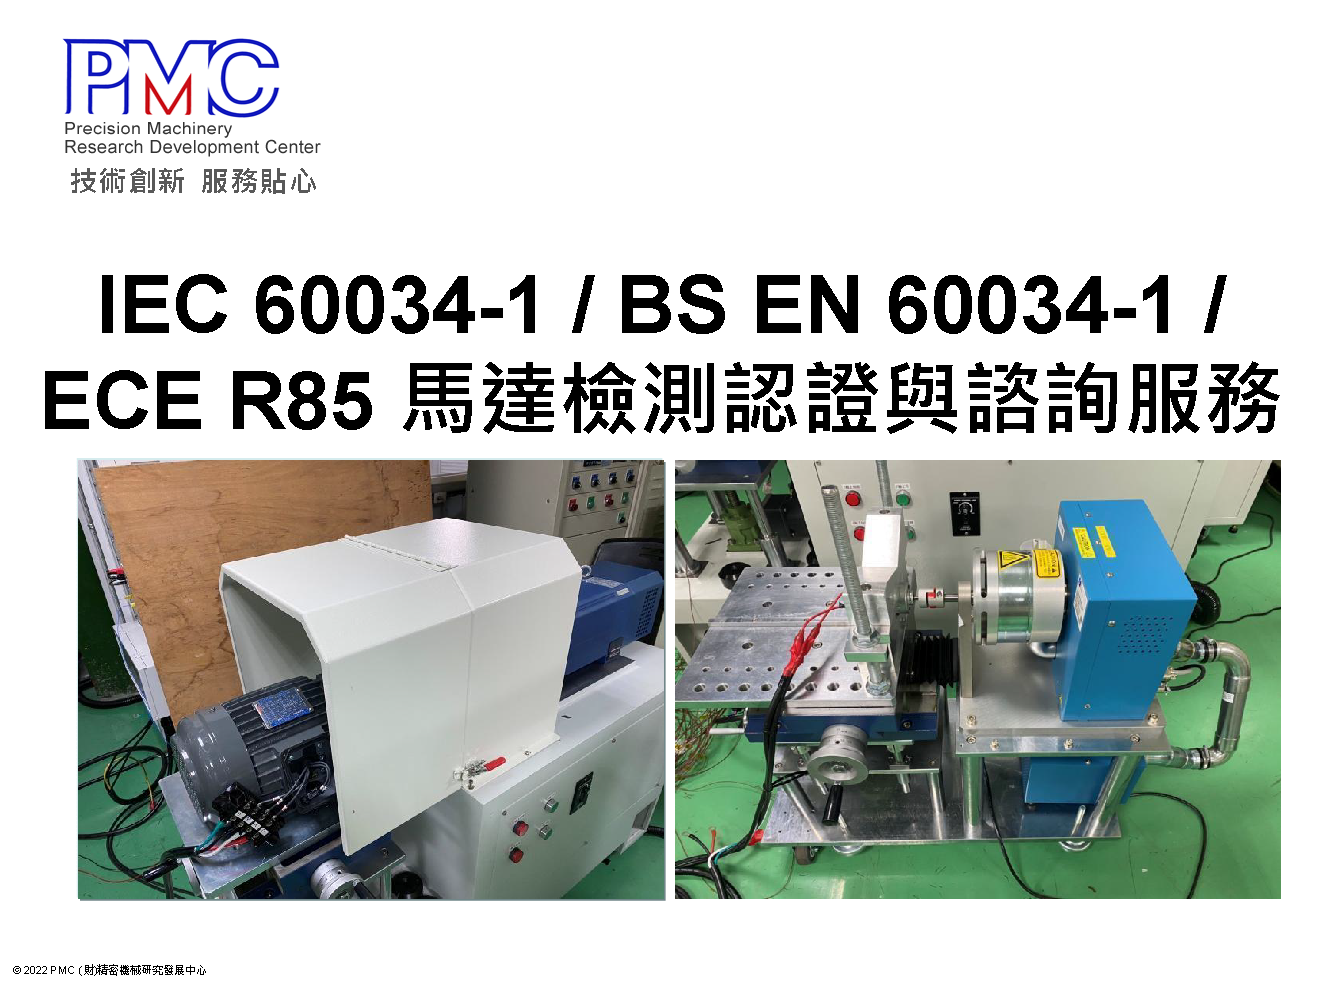 IEC 60034-1 / BS EN 60034-1 / ECE R85 馬達檢測認證與諮詢服務